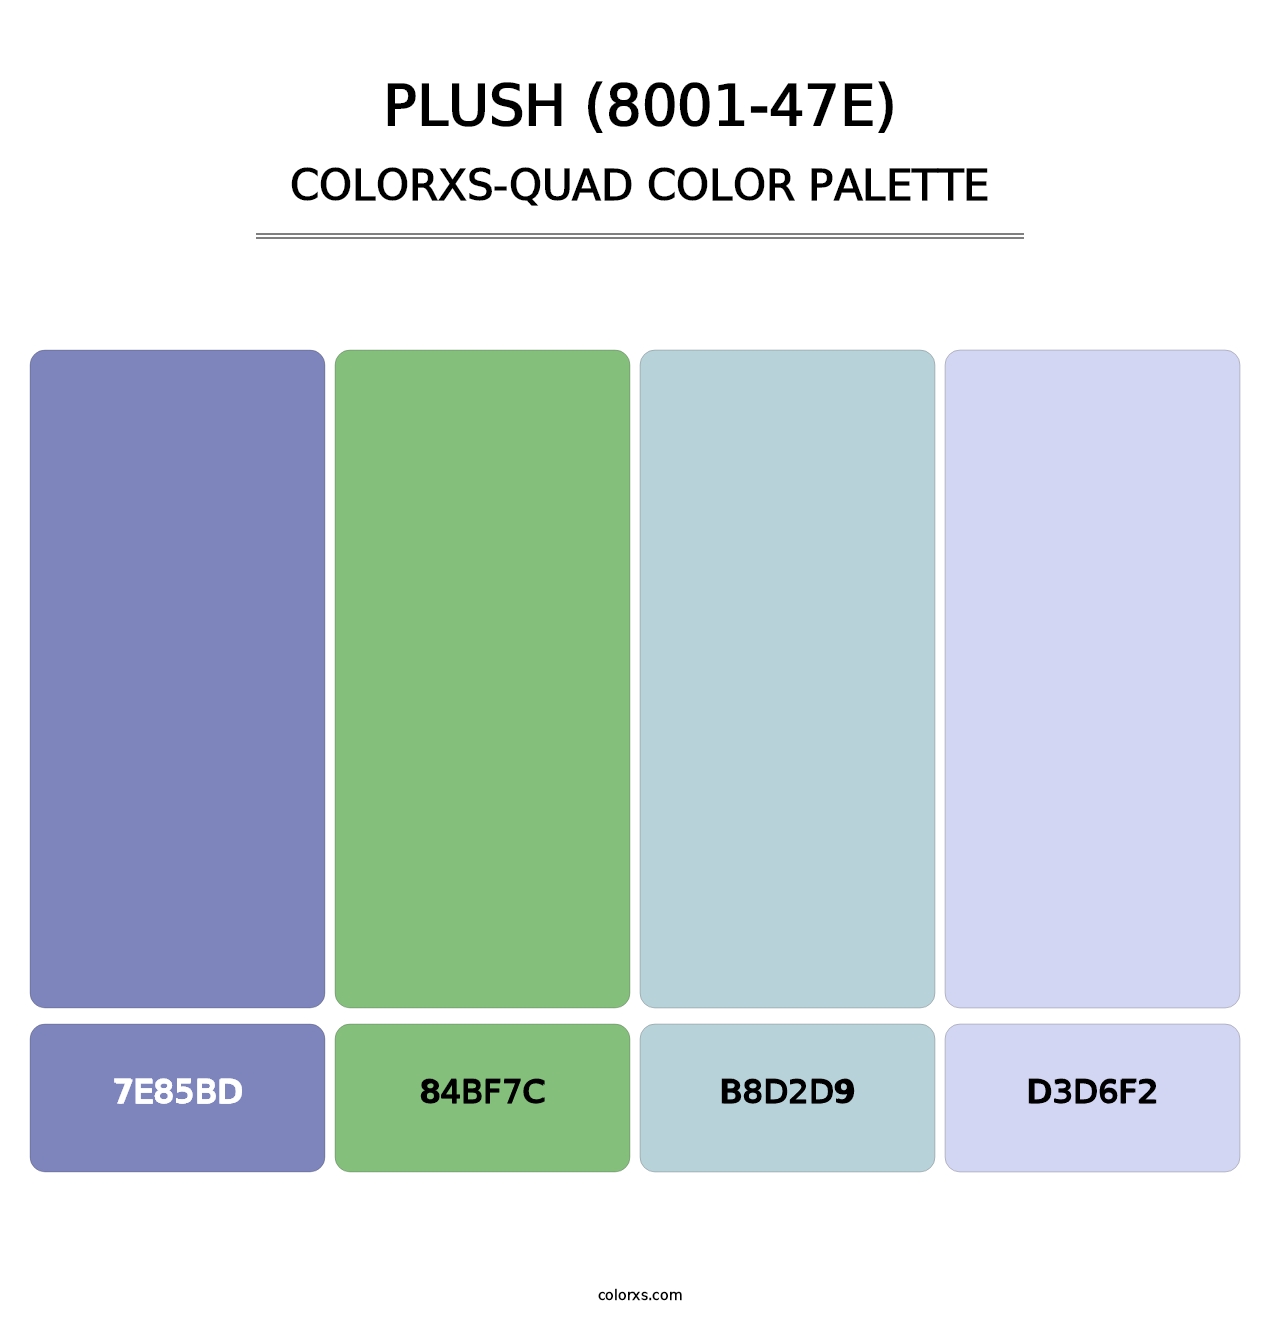 Plush (8001-47E) - Colorxs Quad Palette